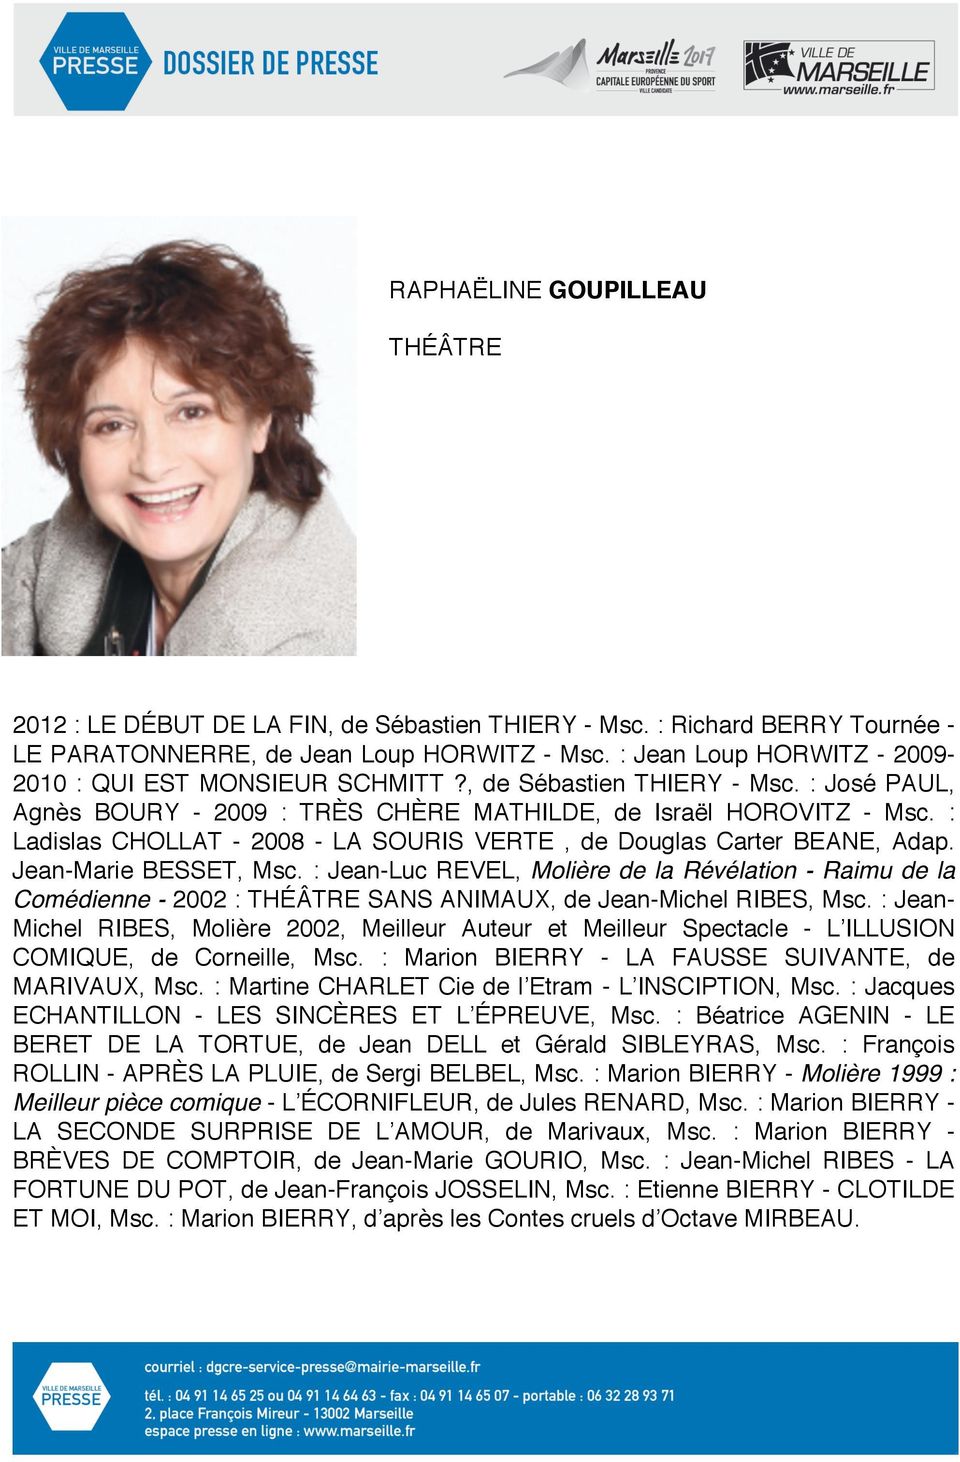 : Ladislas CHOLLAT - 2008 - LA SOURIS VERTE, de Douglas Carter BEANE, Adap. Jean-Marie BESSET, Msc.